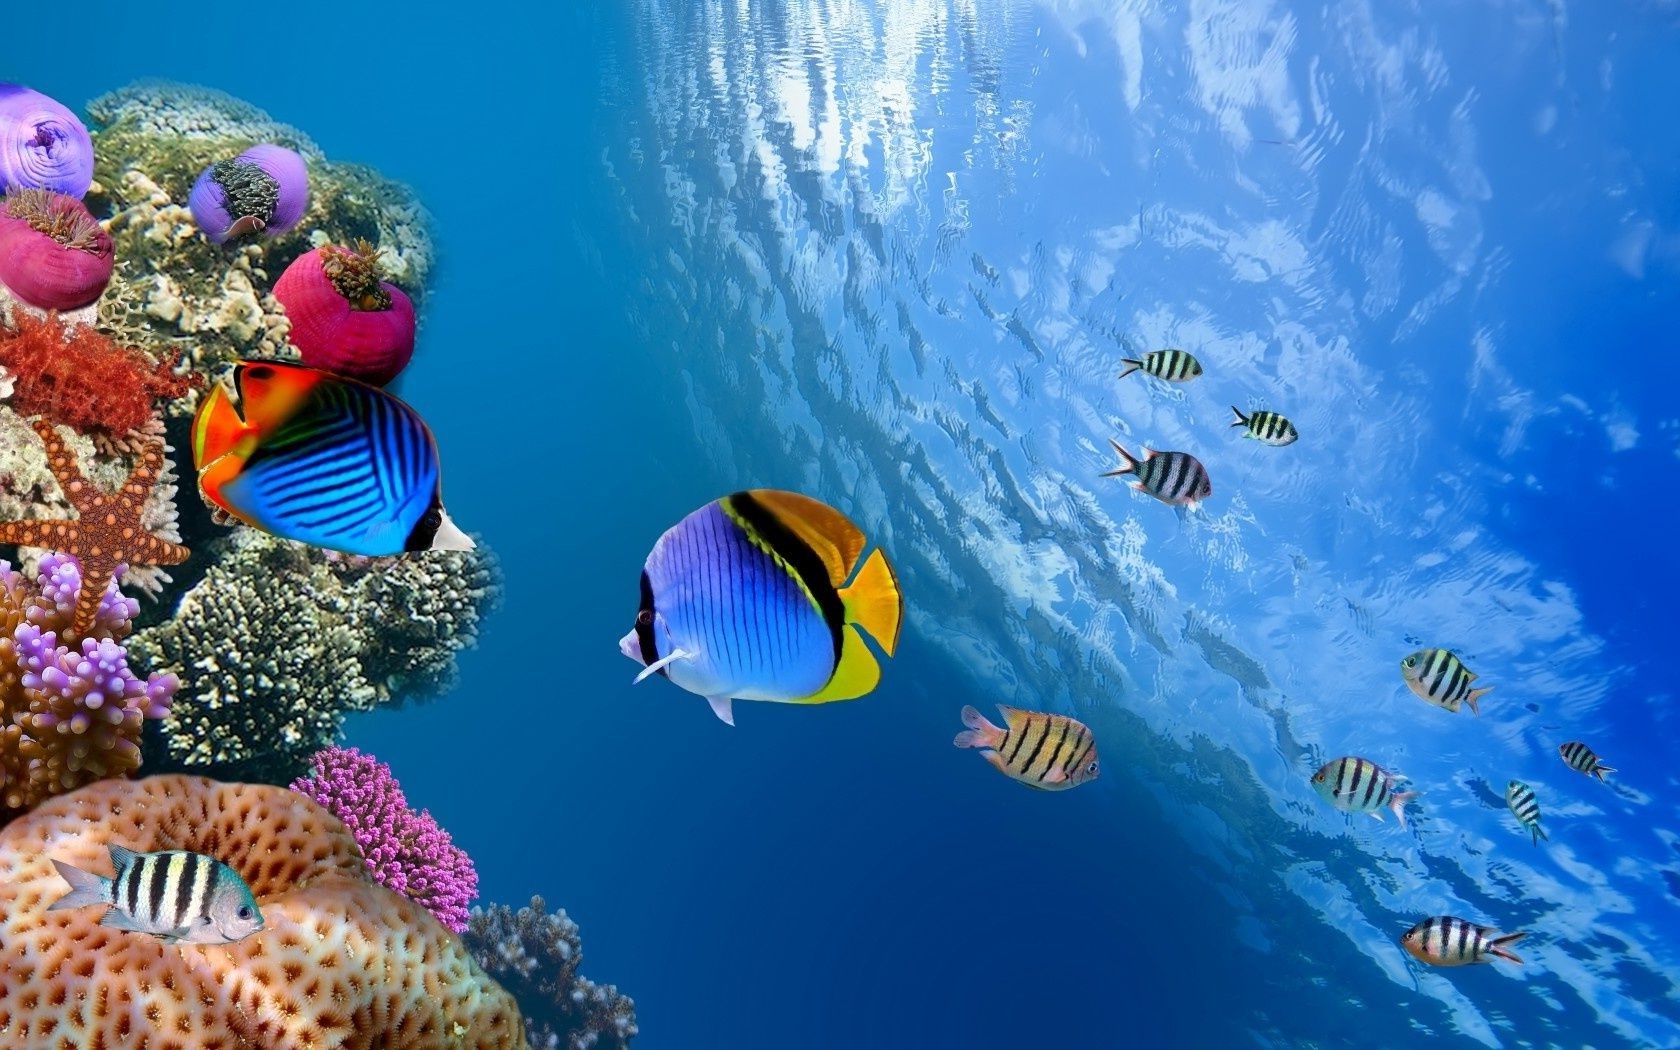 animals underwater fish coral reef ocean tropical water aquarium diving sea swimming deep marine nature submarine snorkeling invertebrate wildlife depth